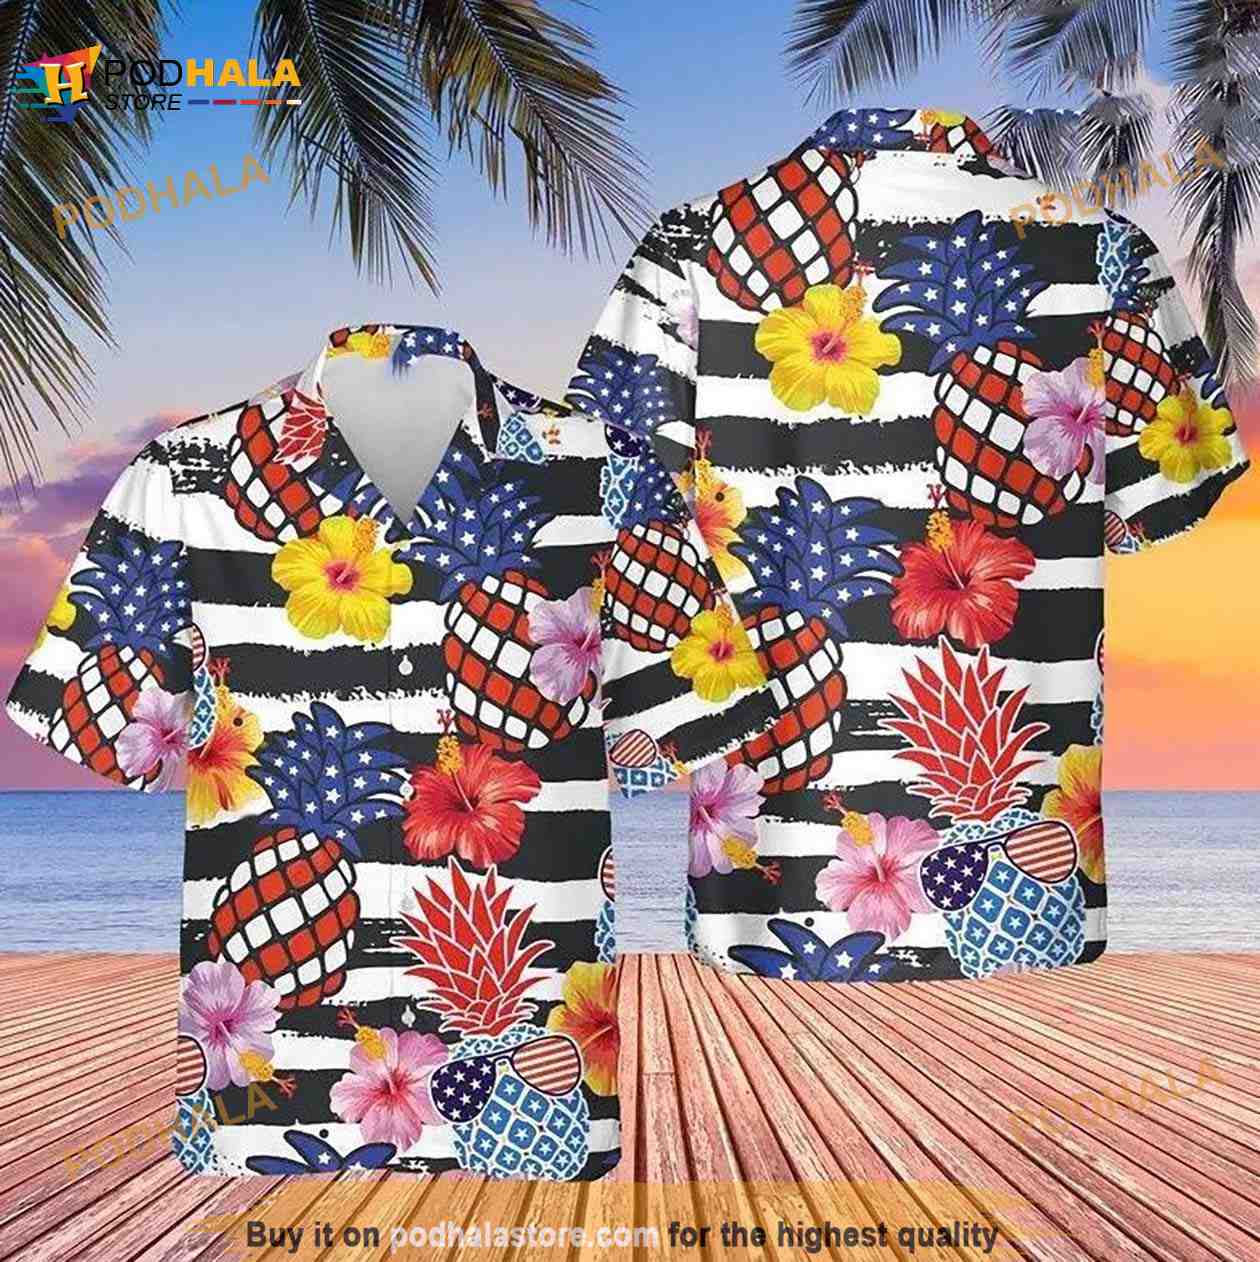 Men's Clothing 'Floral Pineapple' Aloha (Hawaiian) Shirt - 4XL